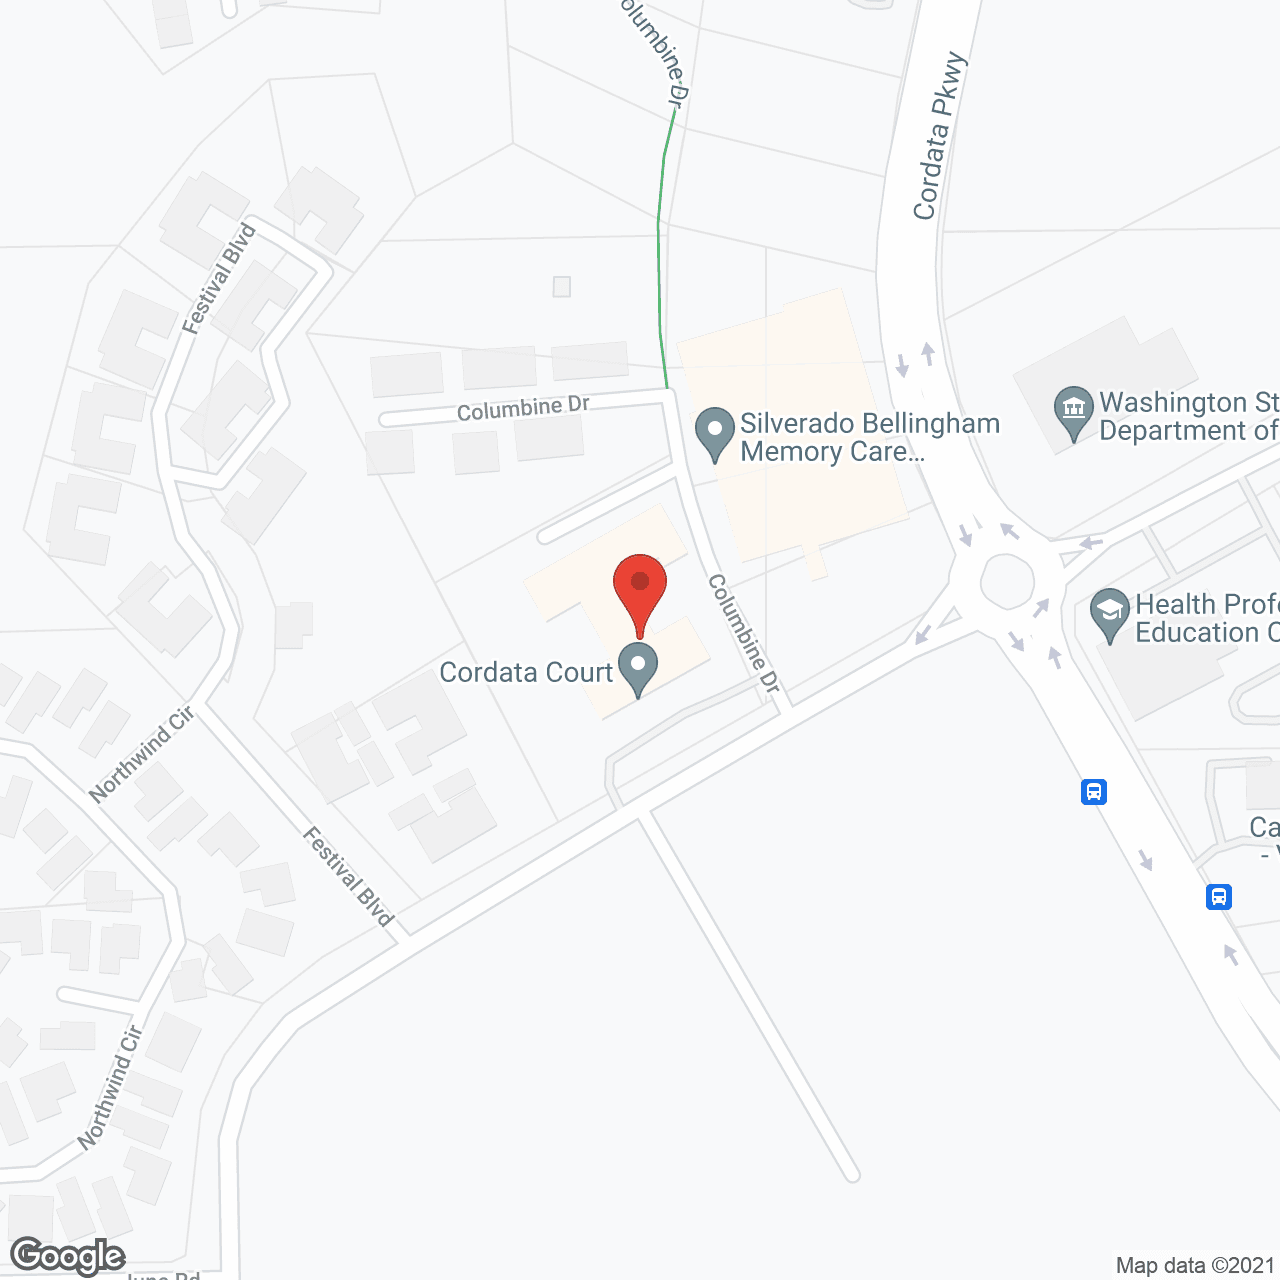 Cordata Court in google map